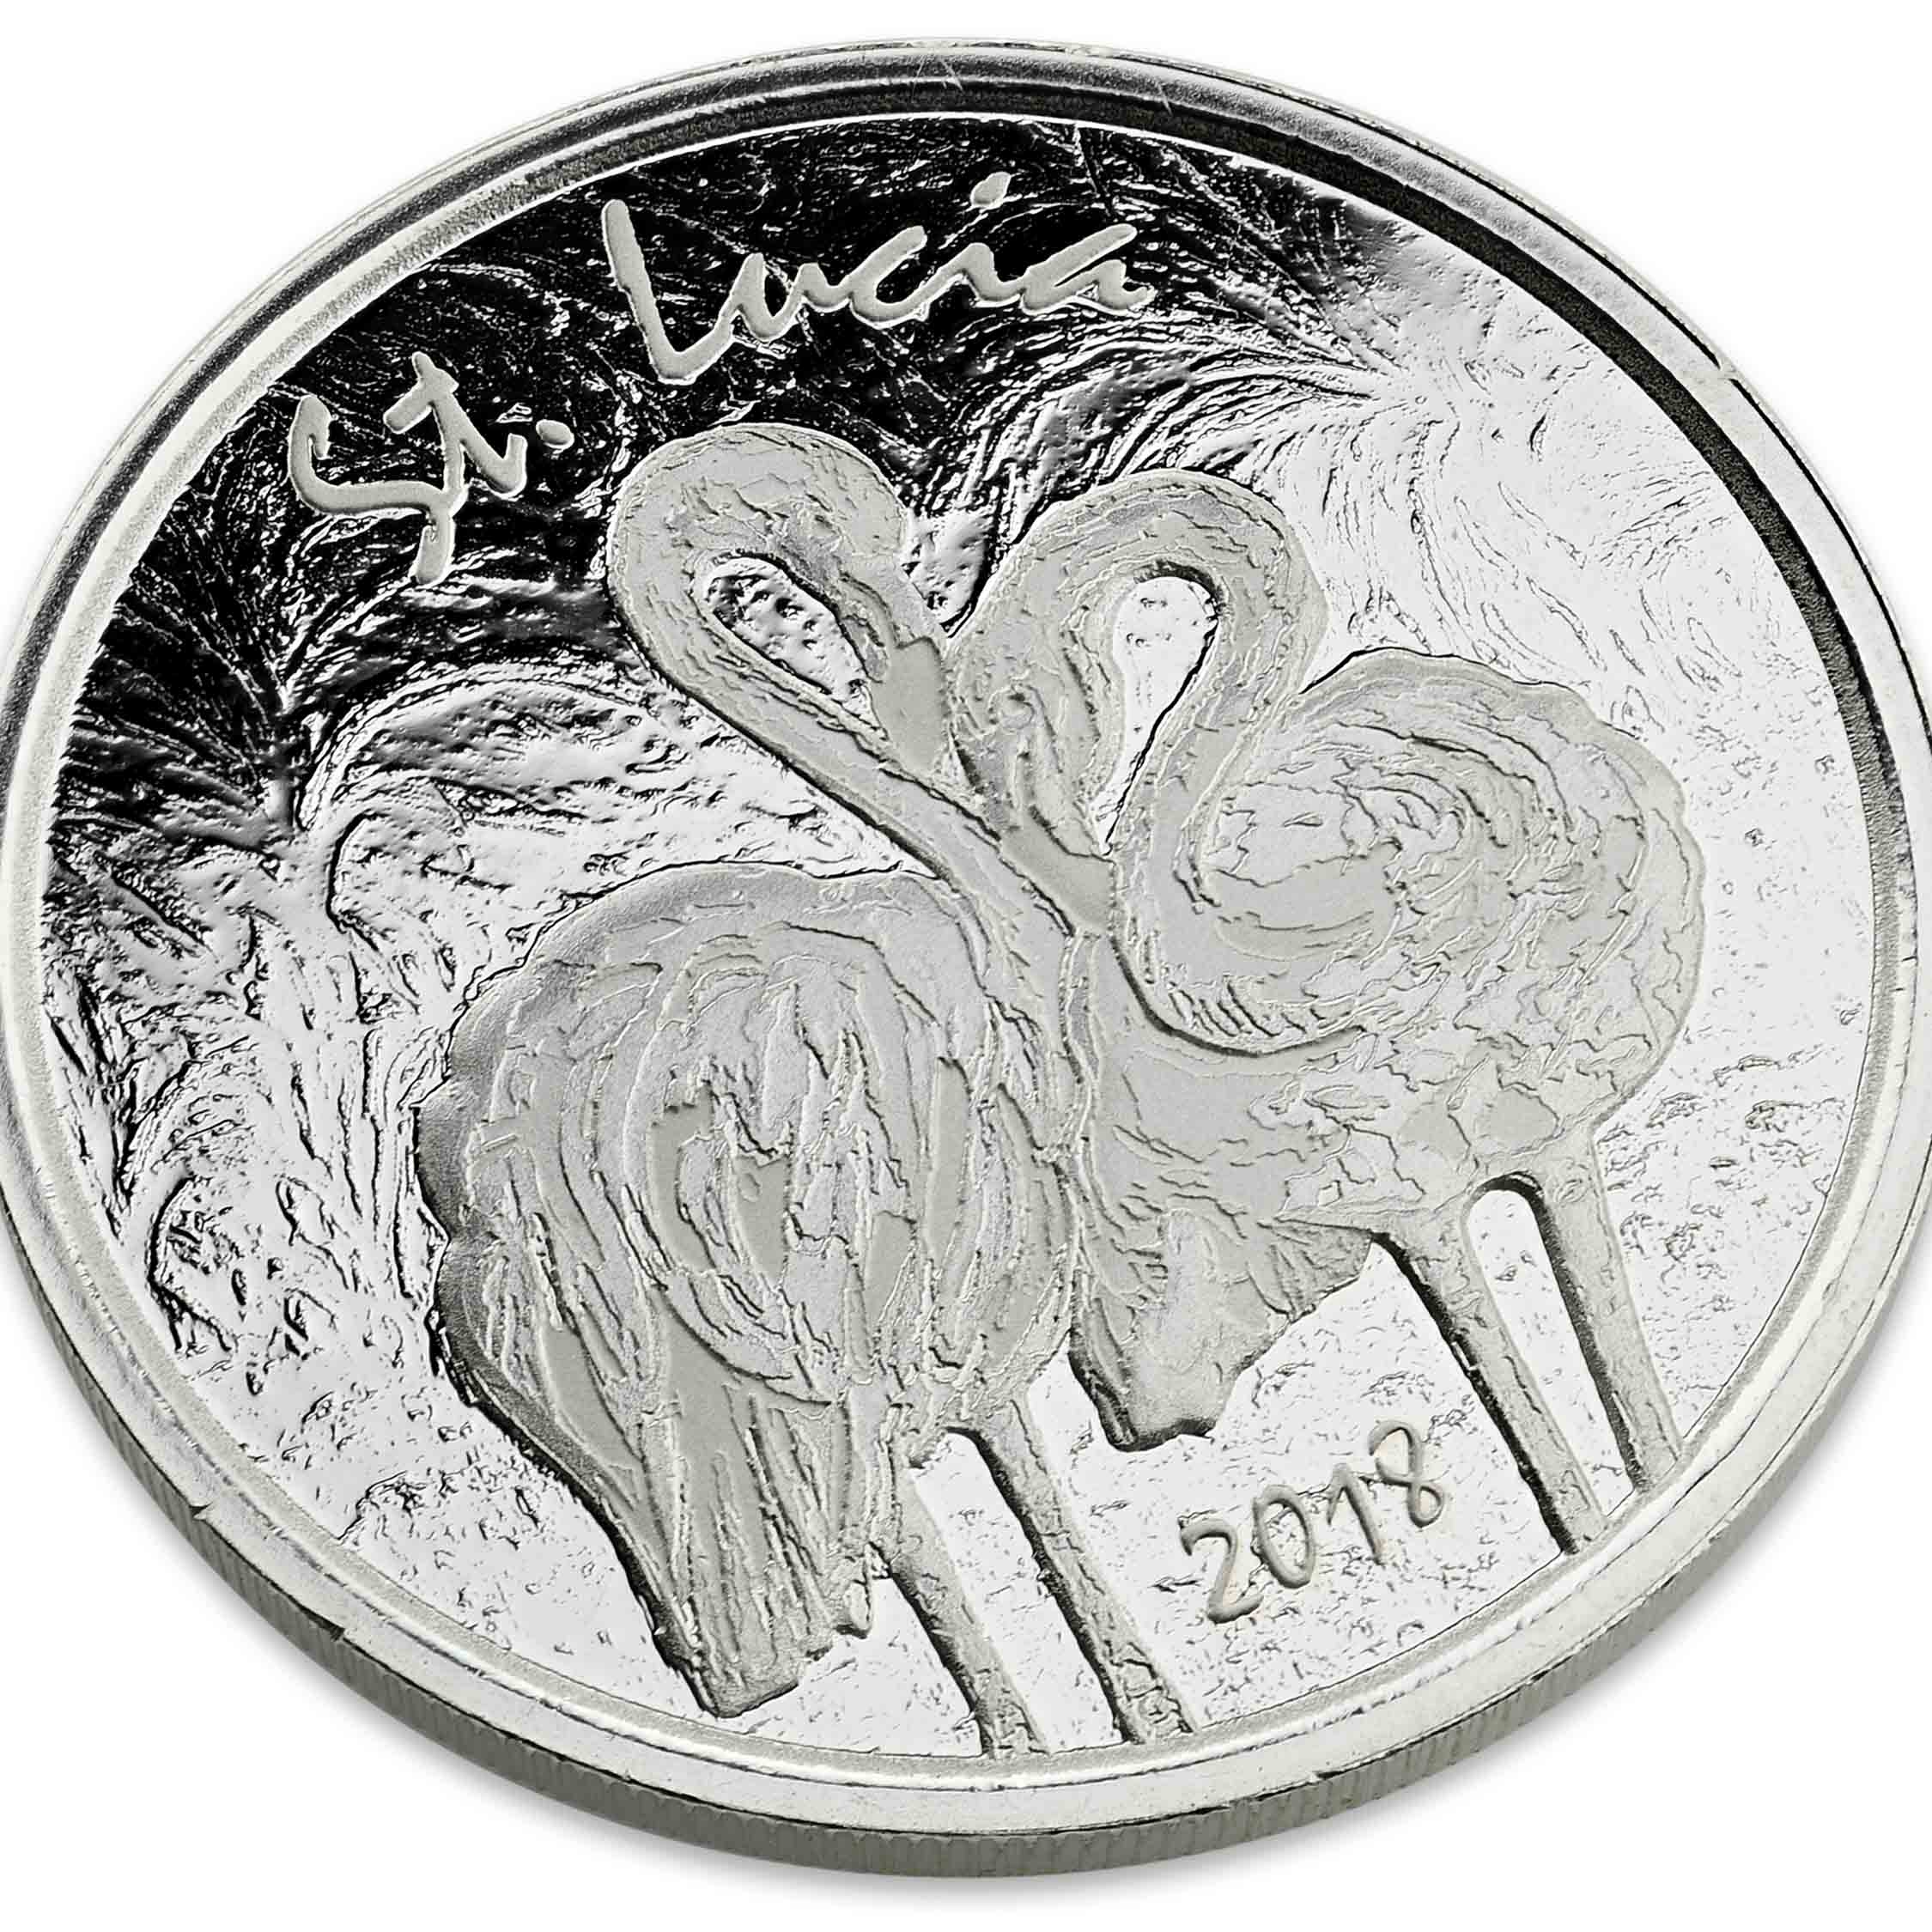 Details about   2018 Saint Lucia Caribbean Flamingo Birds Coin 1 Troy Oz .999 silver Gift 